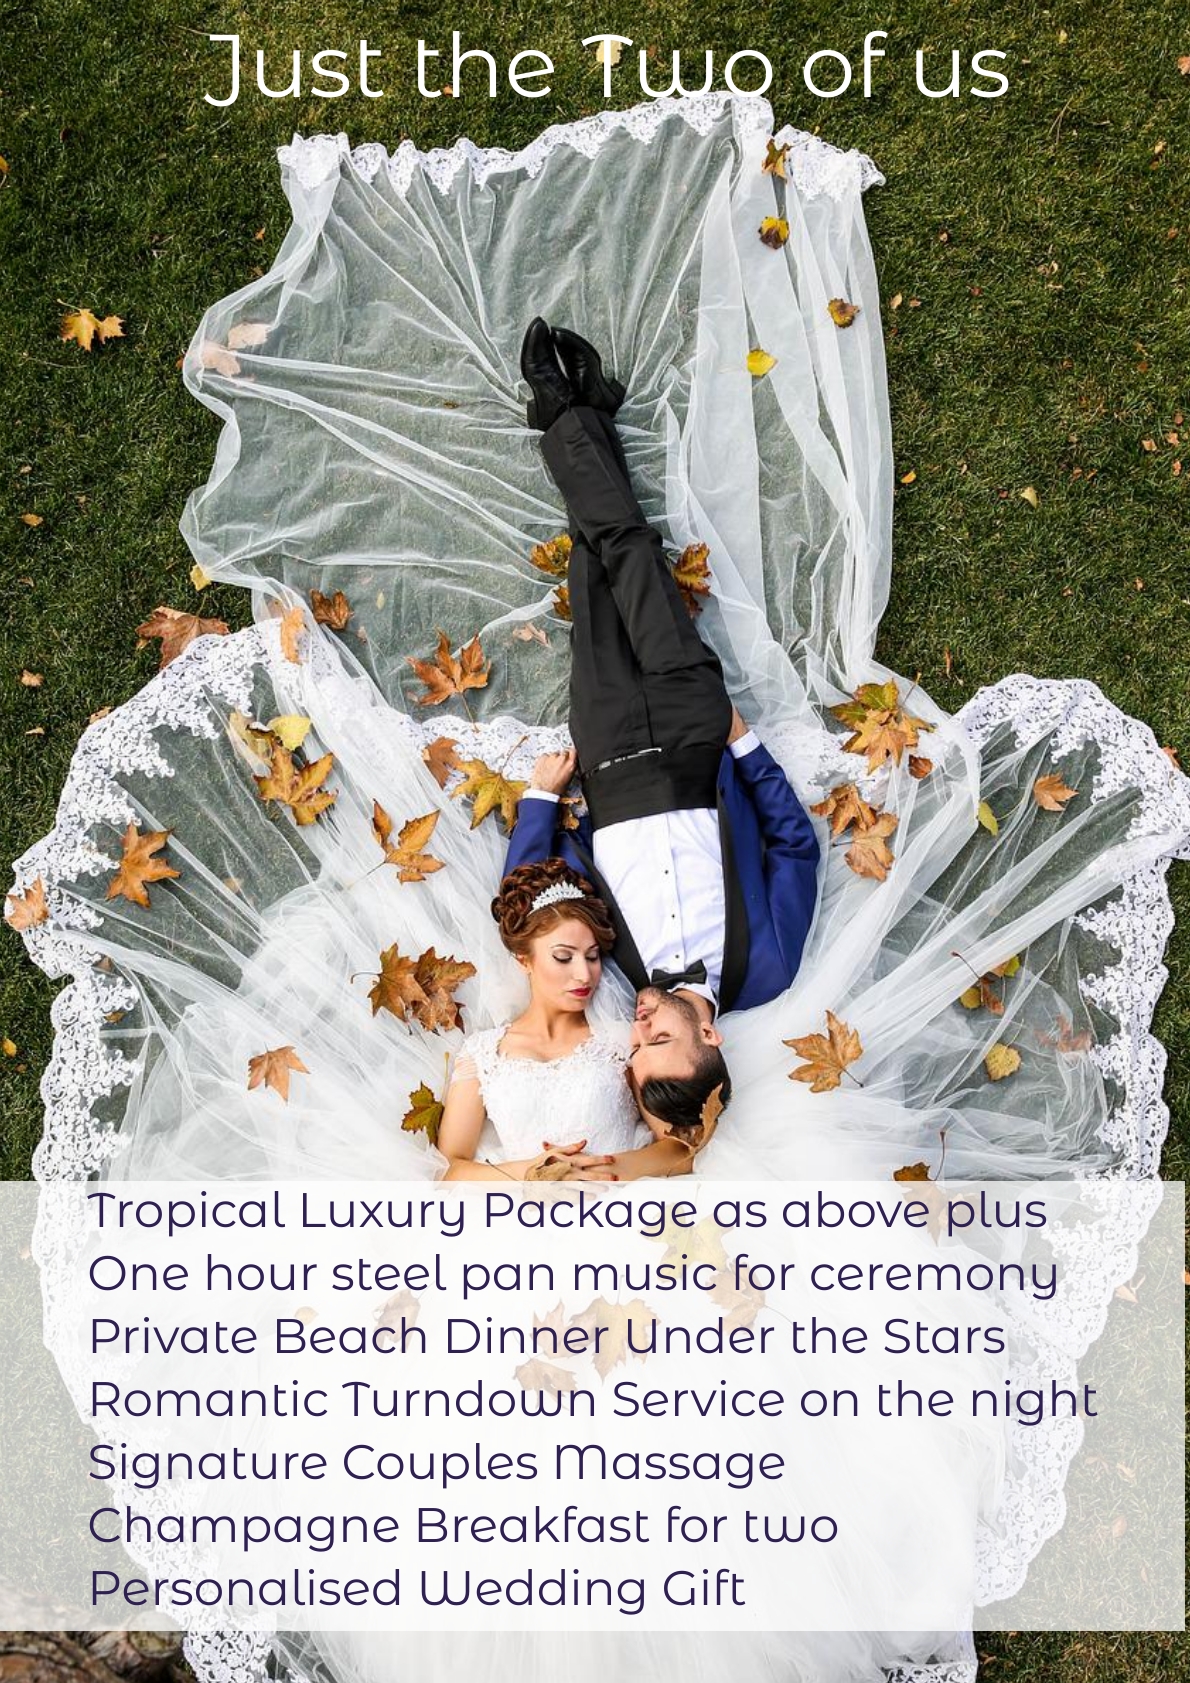 Elegant Hotels Wedding Packages in Barbados witrh Glen Travel.